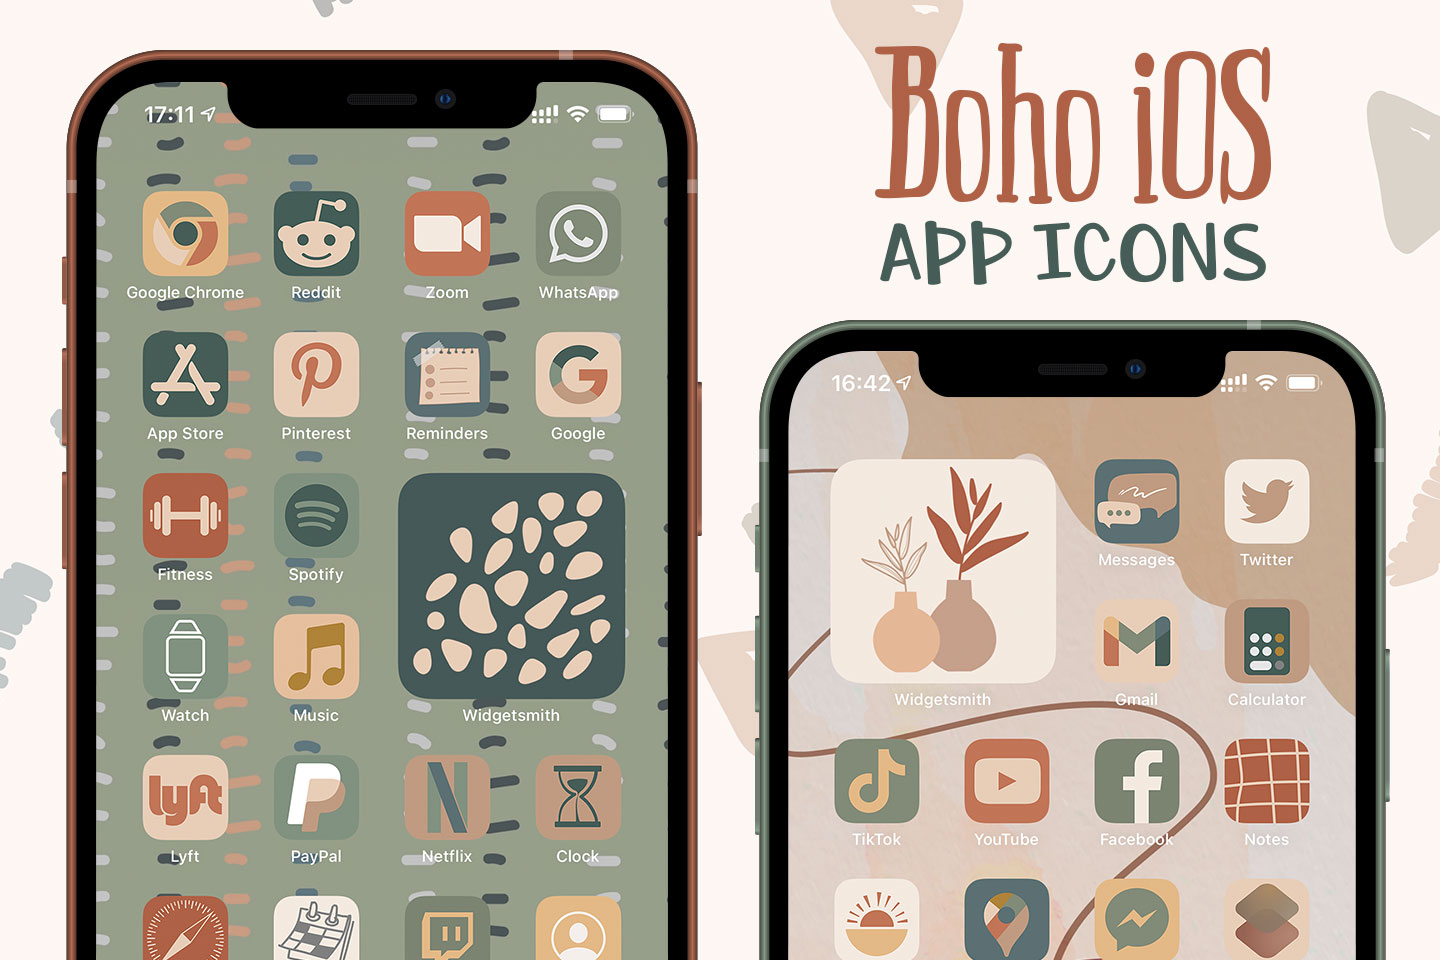 Aesthetic Boho Iphone Wallpapers